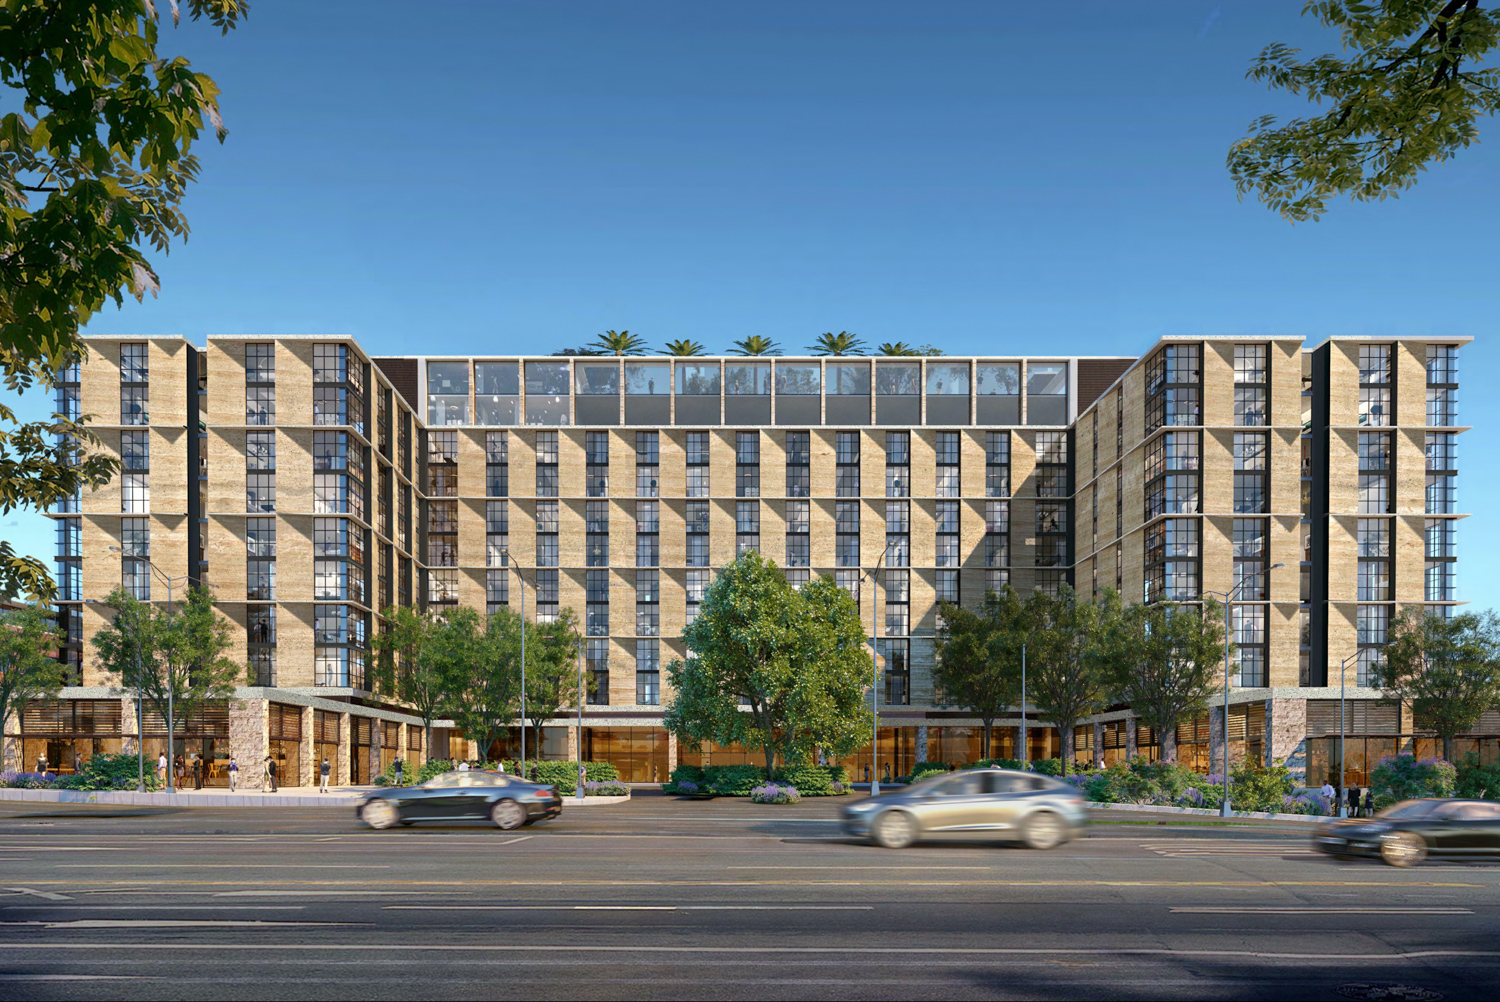 Related Santa Clara Block 5B hotel, rendering via Gensler design by Foster and Partners